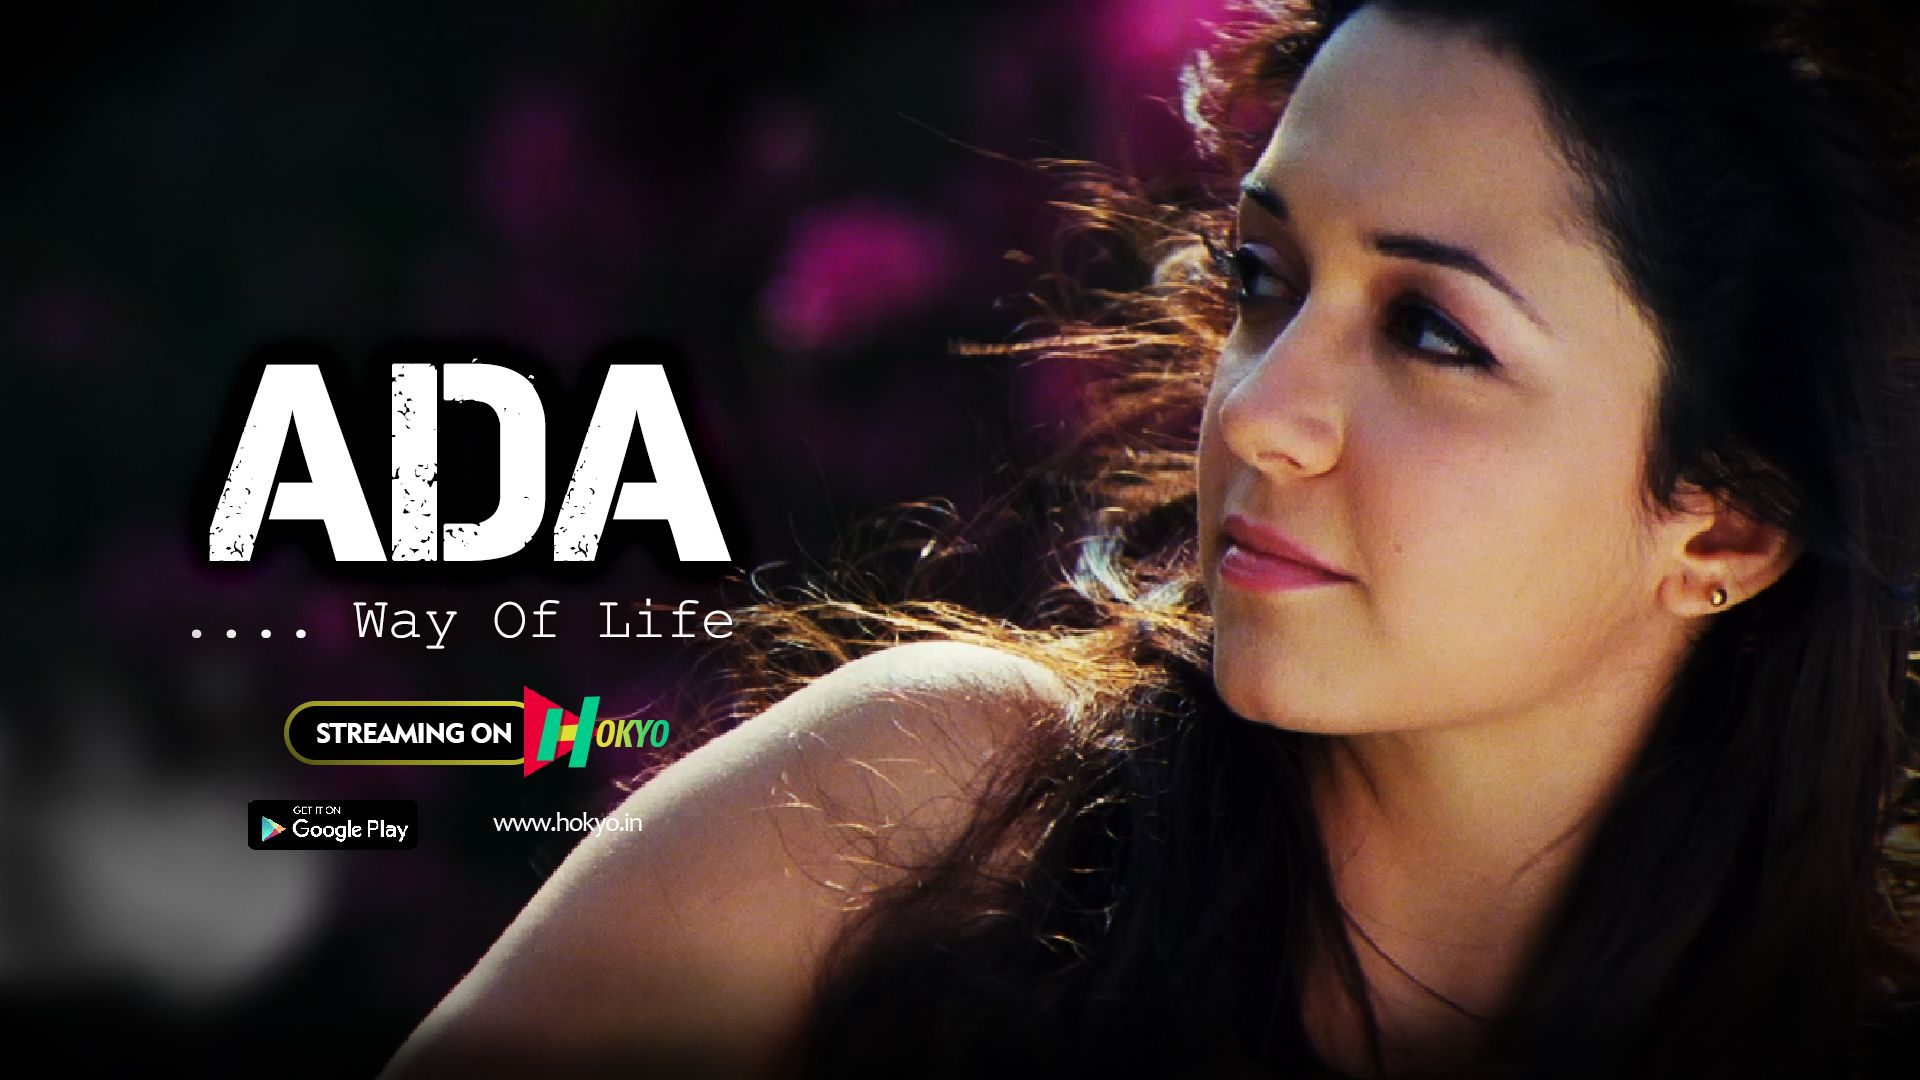 ADA...way of life | Full Hindi Movie on HOKYO